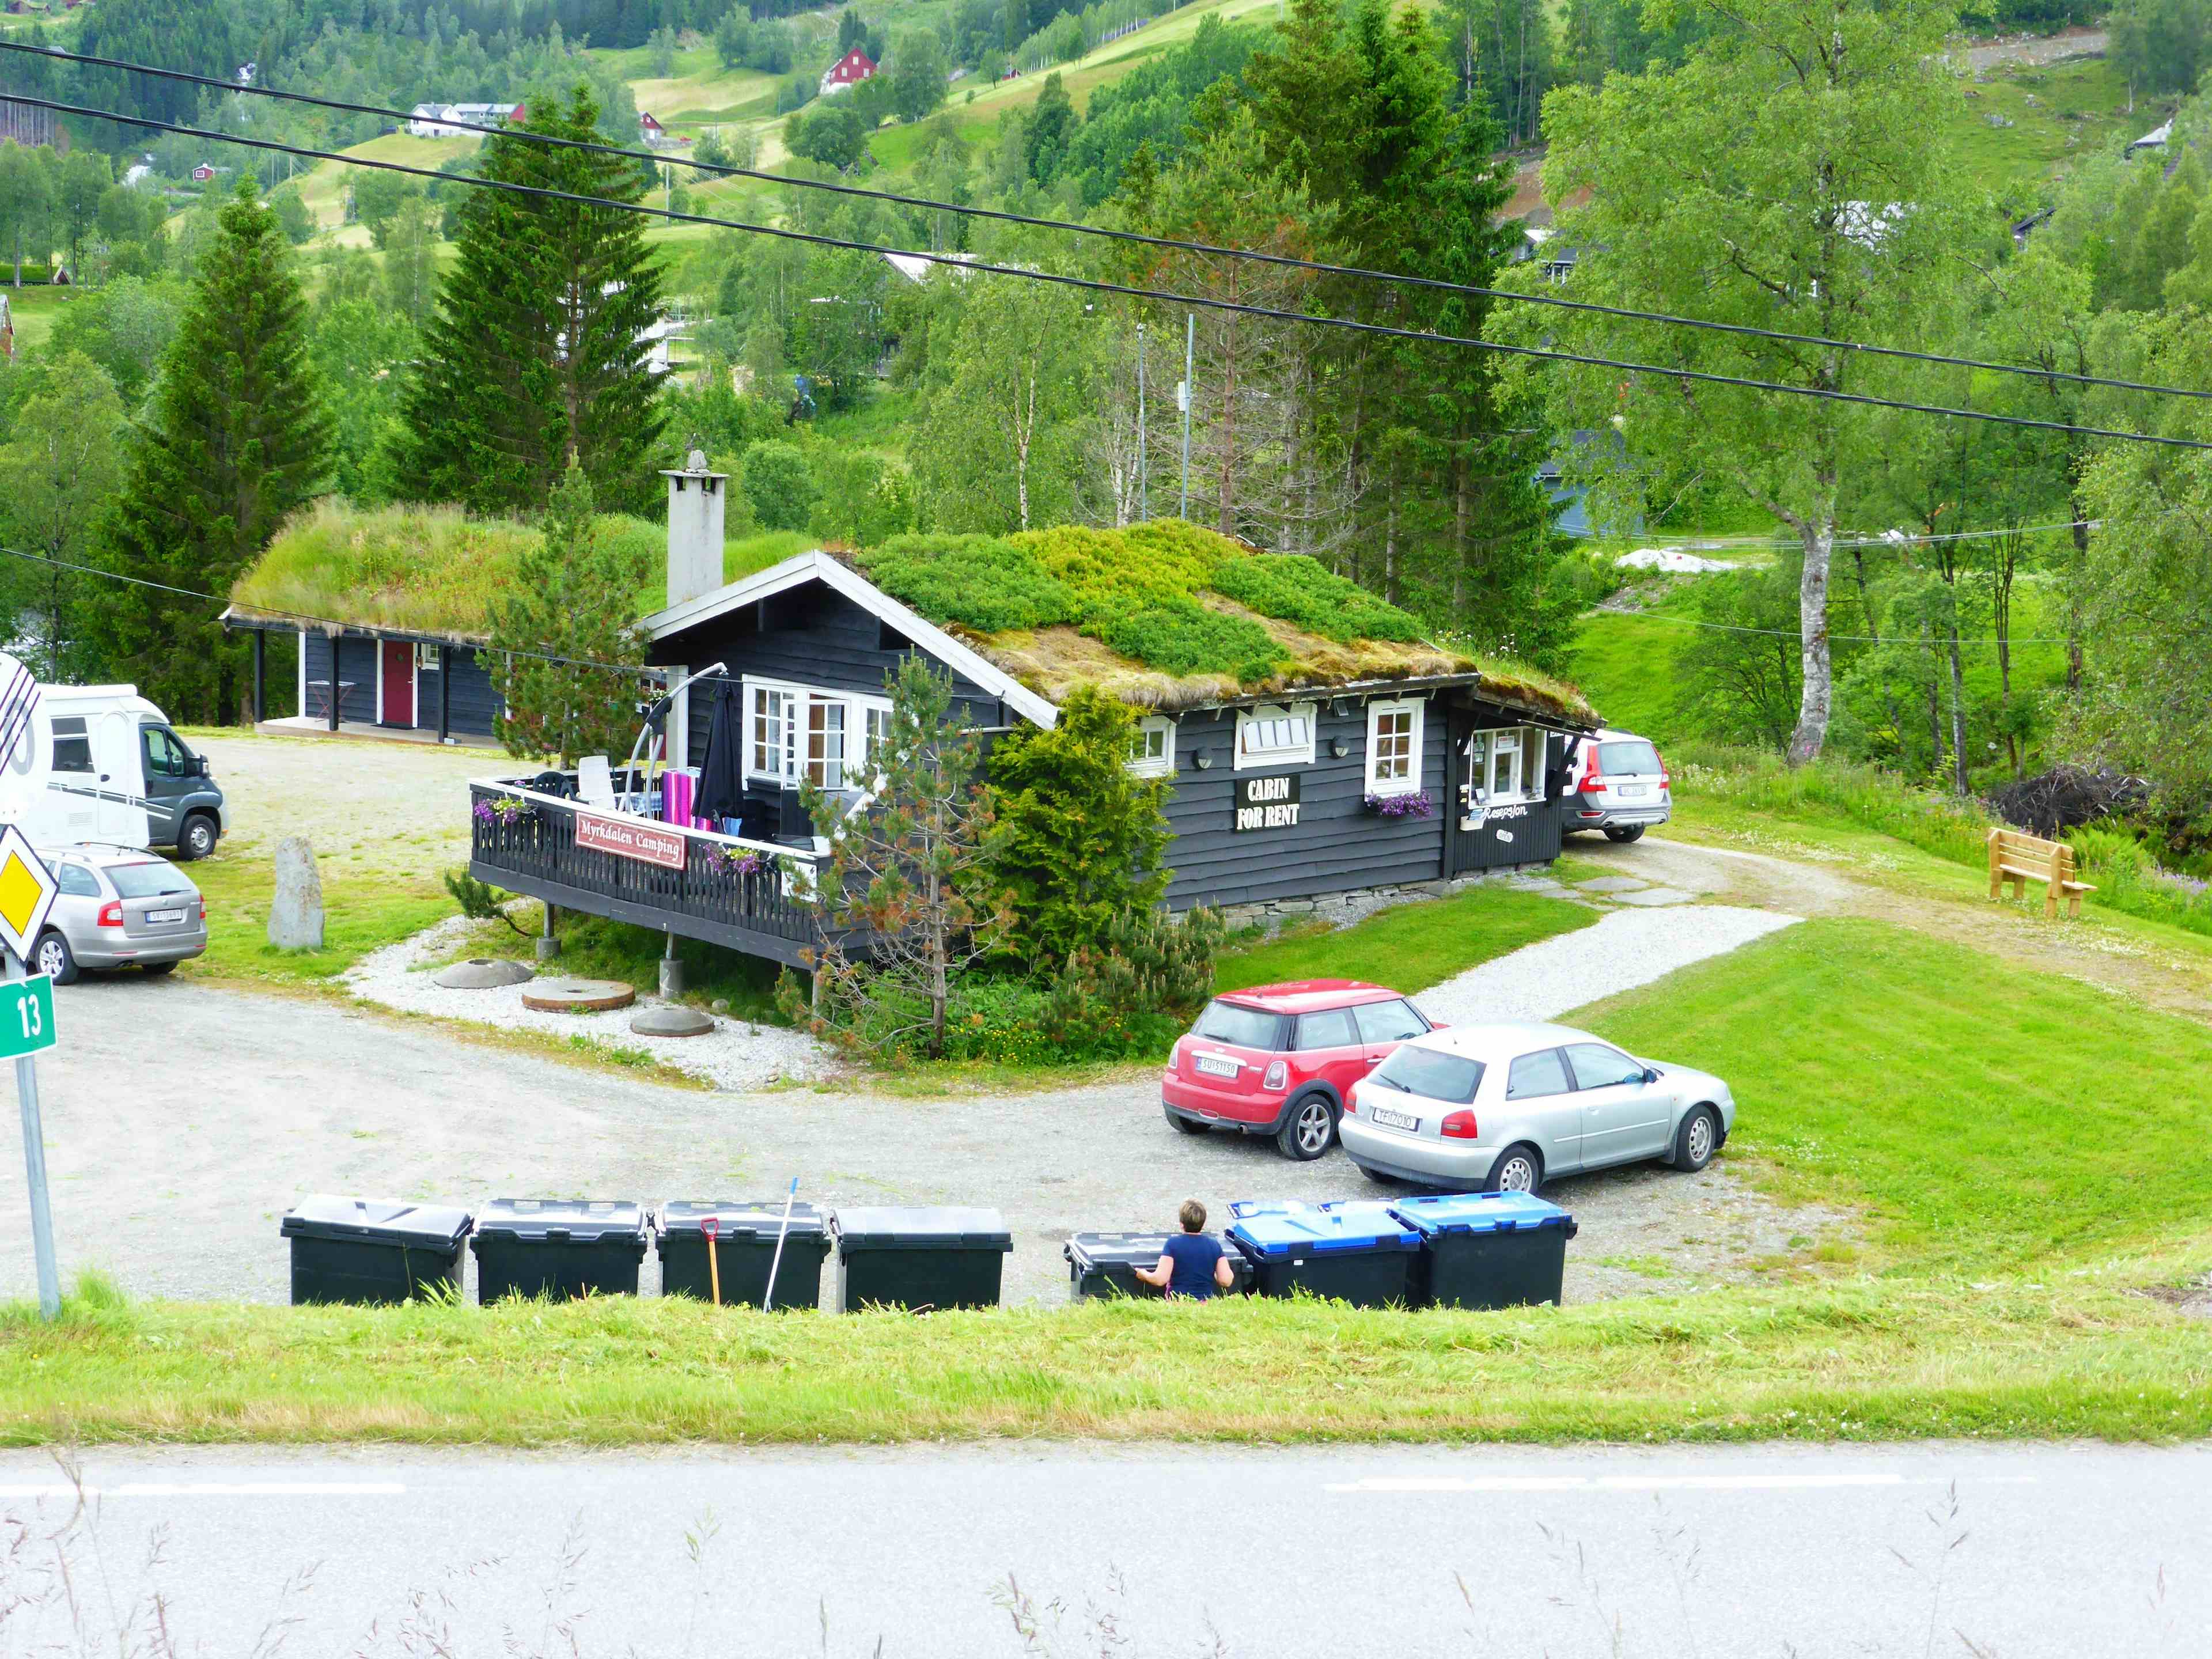 Myrkdalen Camping